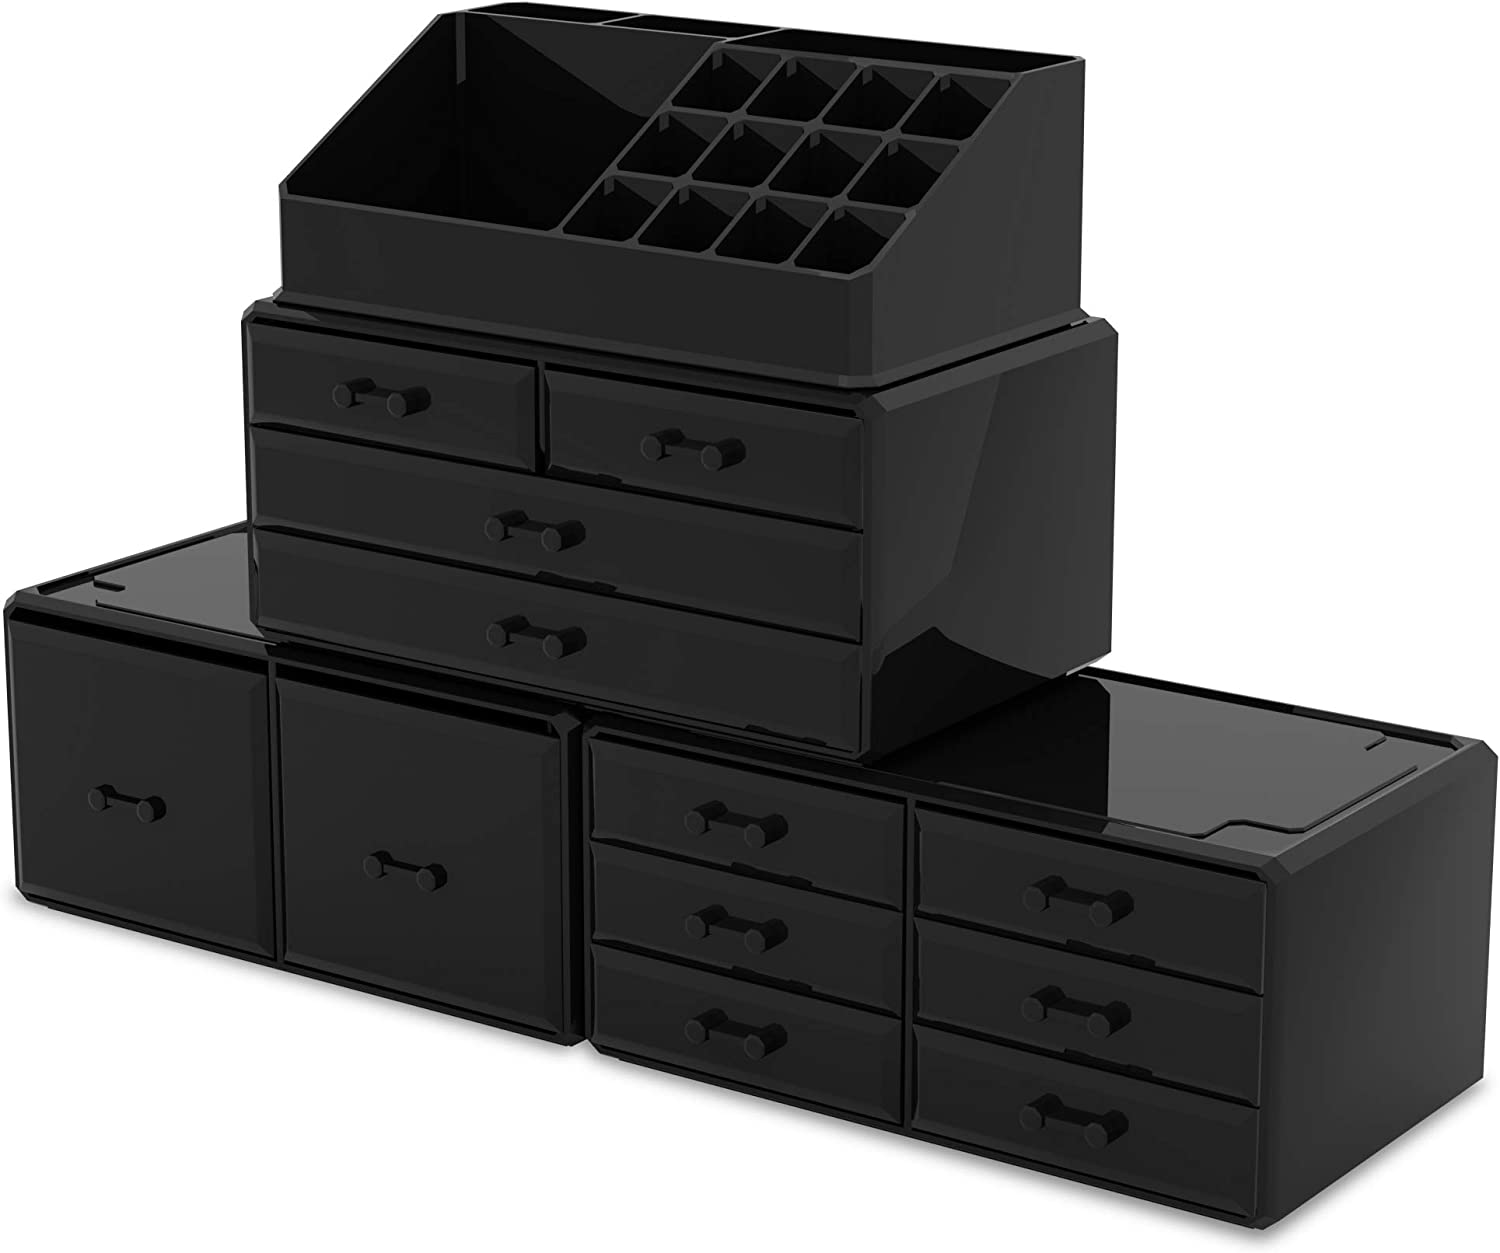 Makeup Cosmetic Organizer Storage with 12 Drawers Display Boxes Black